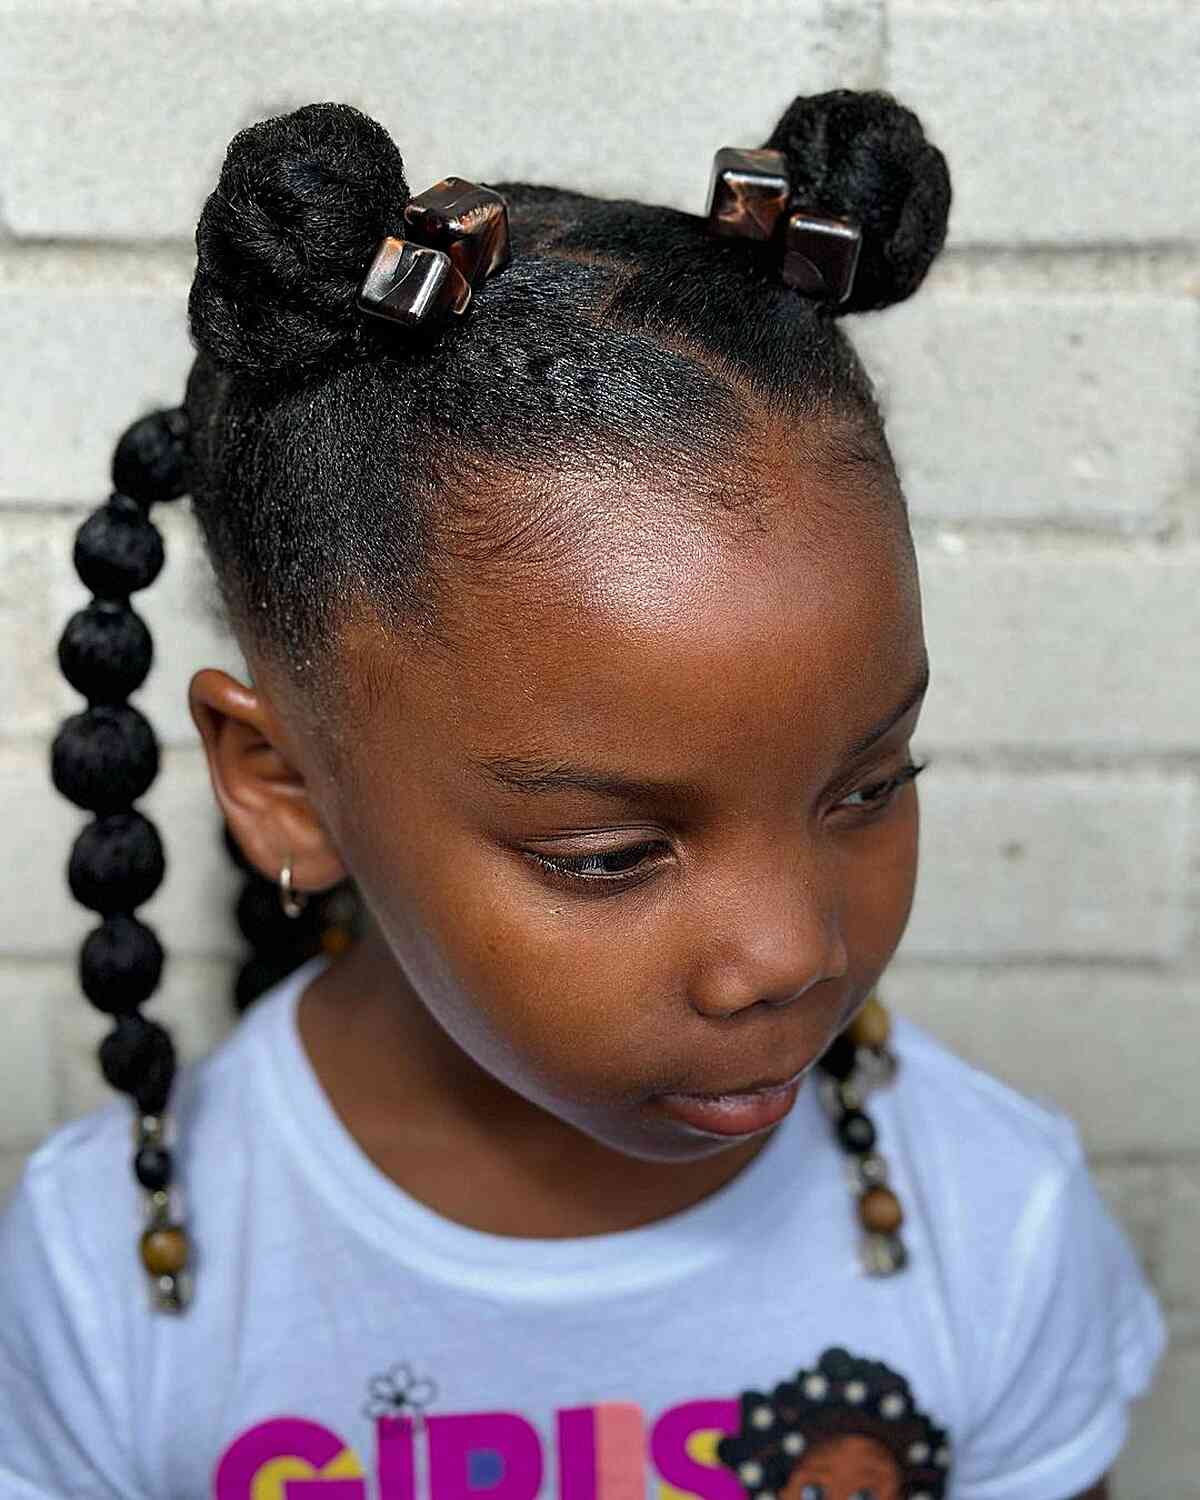 My Birthday Hairstyle Black Girl | TikTok